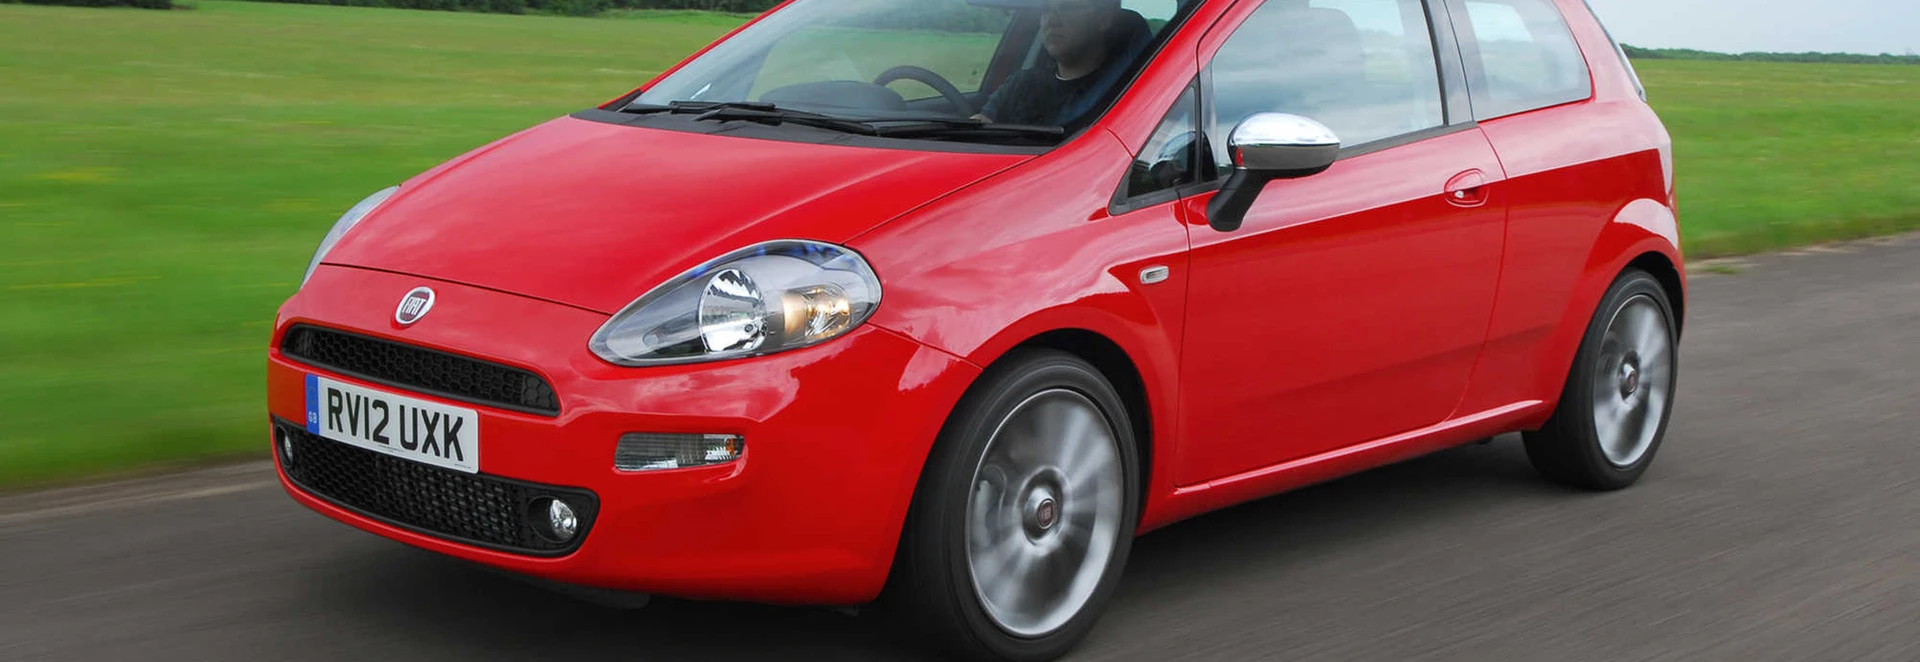 Fiat Punto hatchback review 